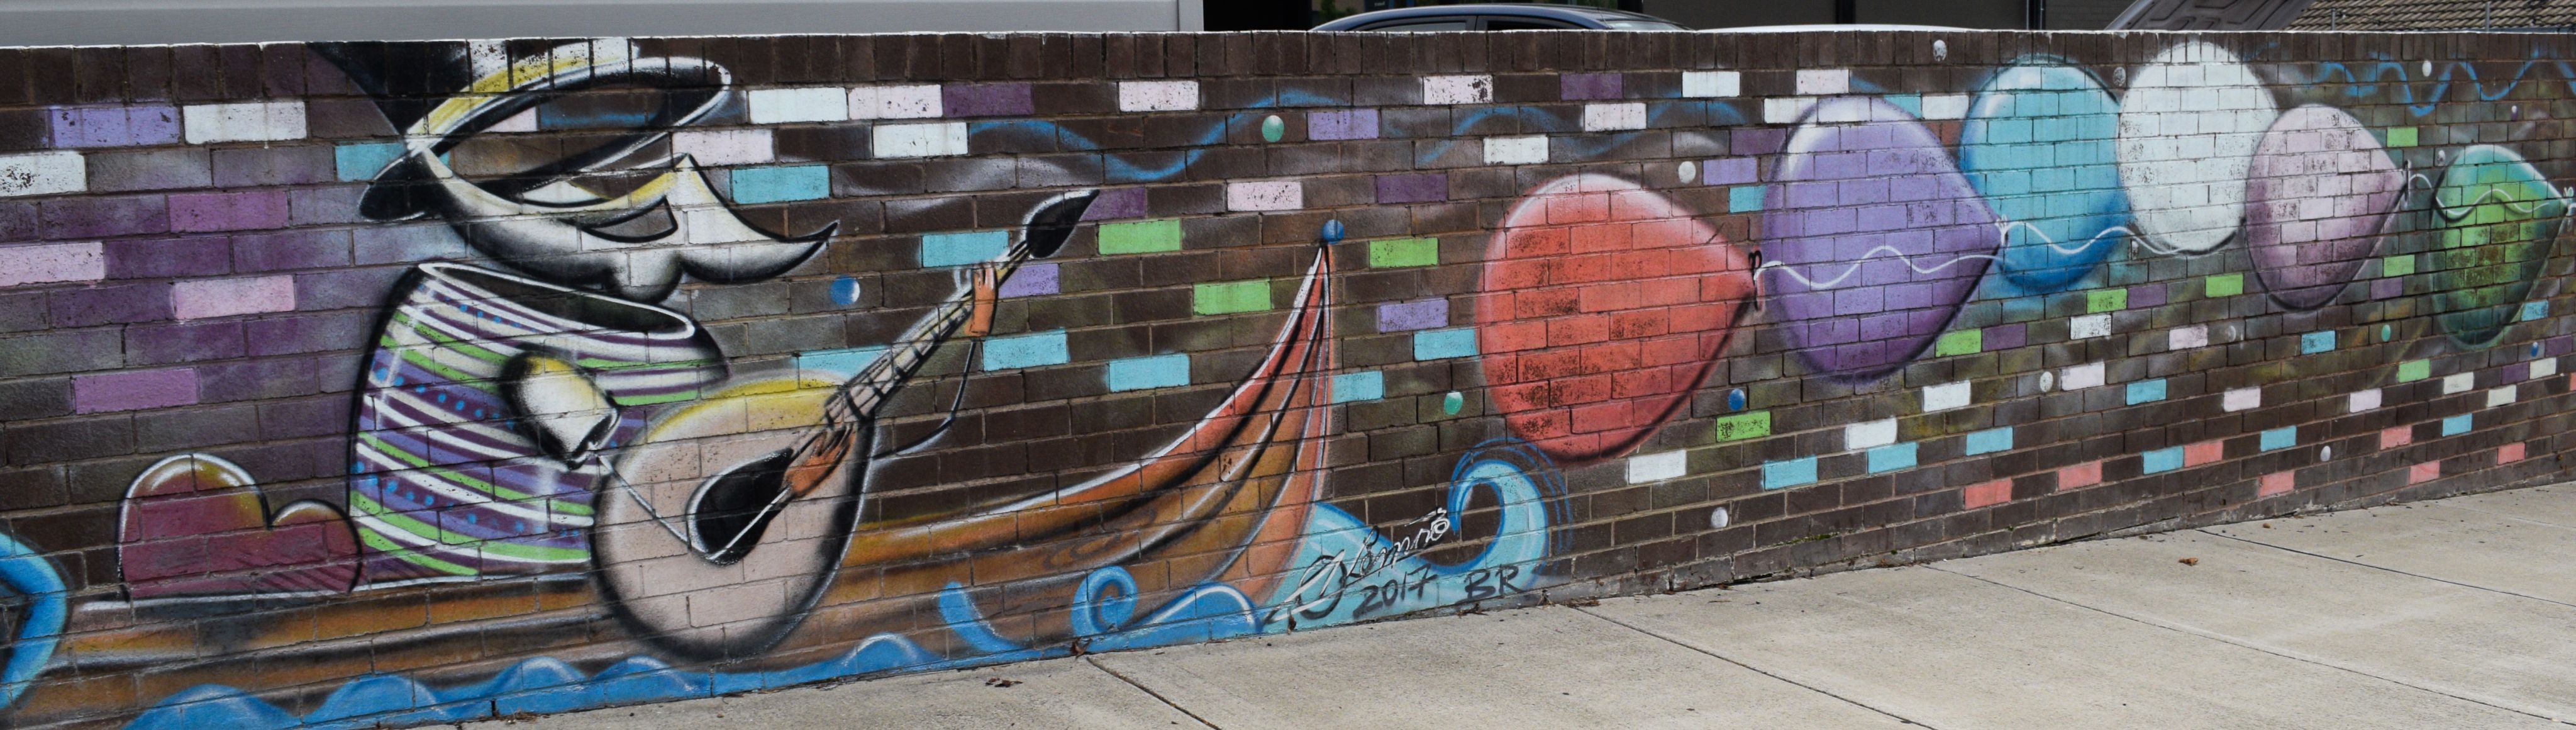 Colourful Graffiti, creature playing banjo in canoe 